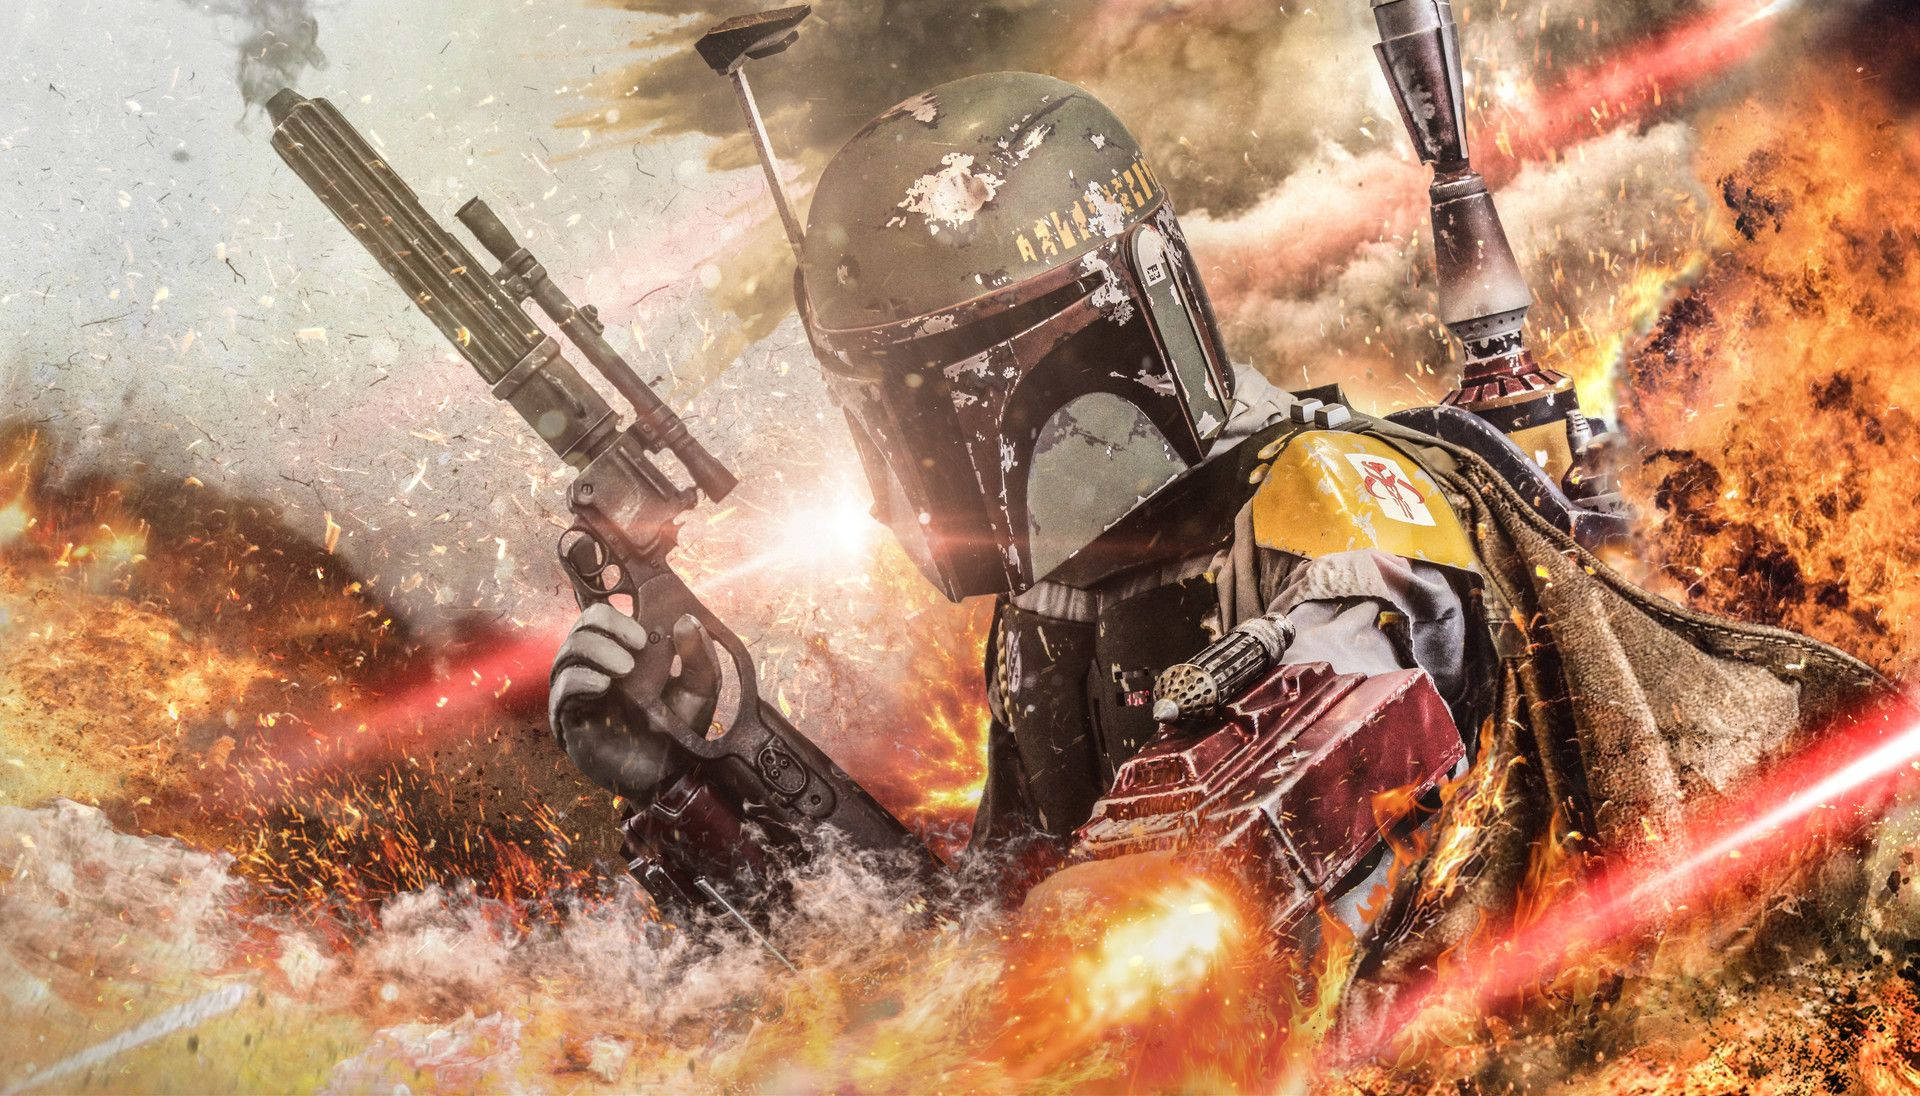 Boba Fett readying for battle in Star Wars: Battlefront Wallpaper